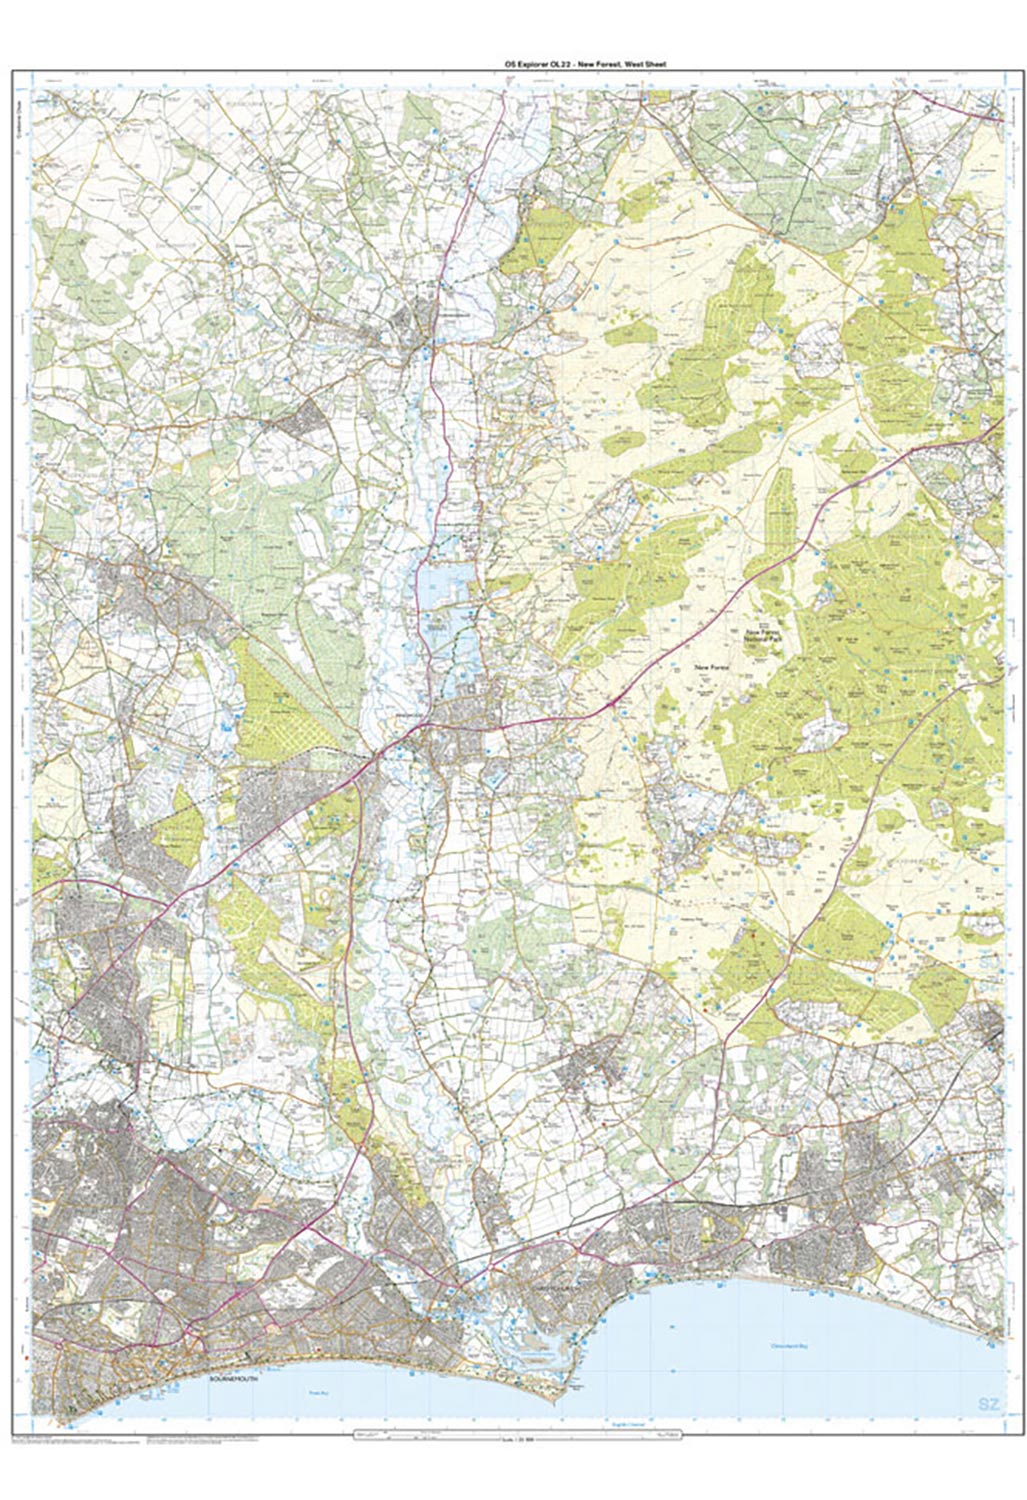 Ordnance Survey New Forest - OS Explorer OL22 Map